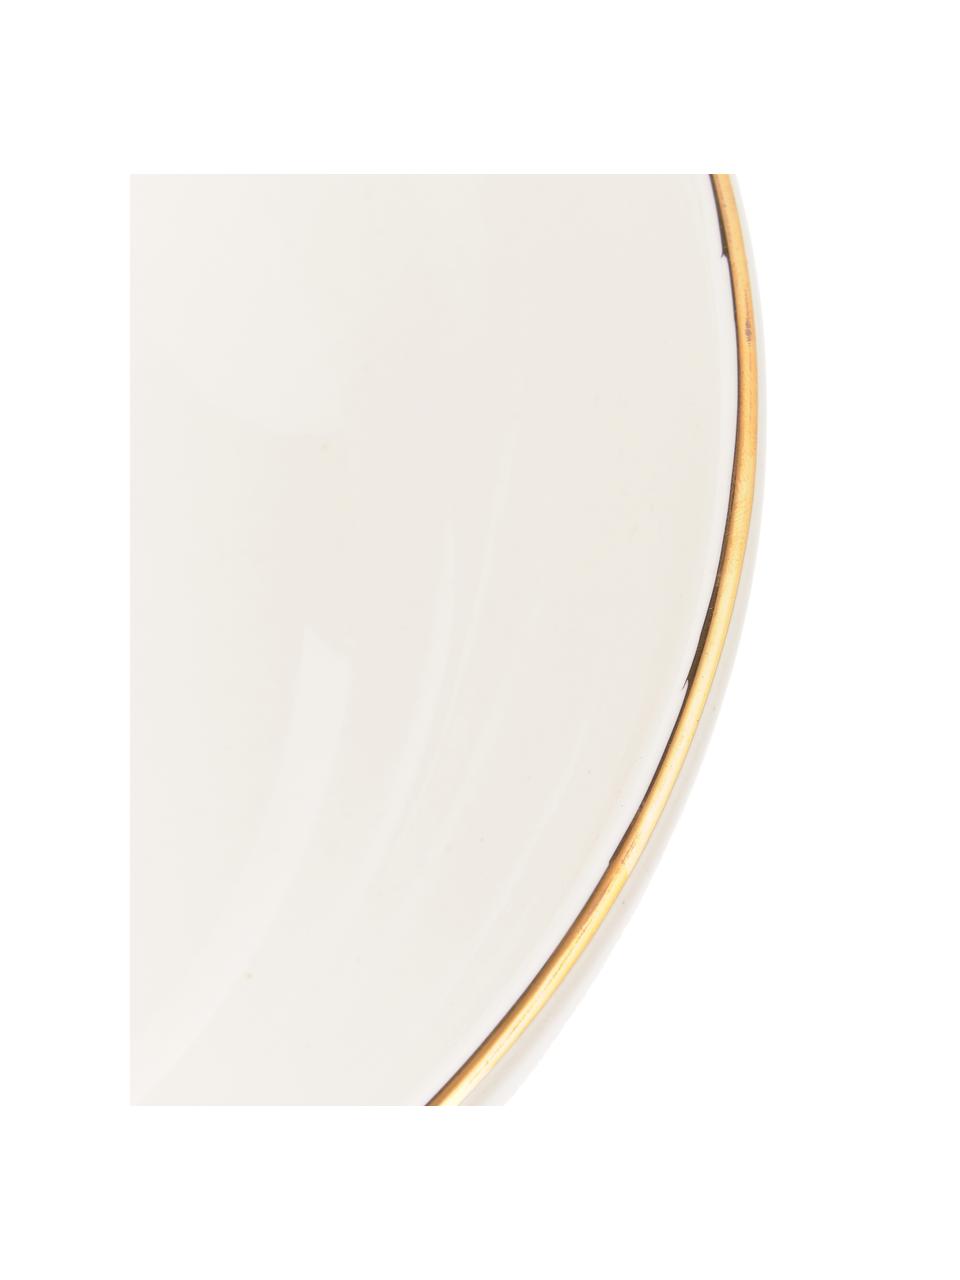 Ensaladera artesanal Allure, Cerámica, Blanco, dorado, Ø 25 x Al 8 cm